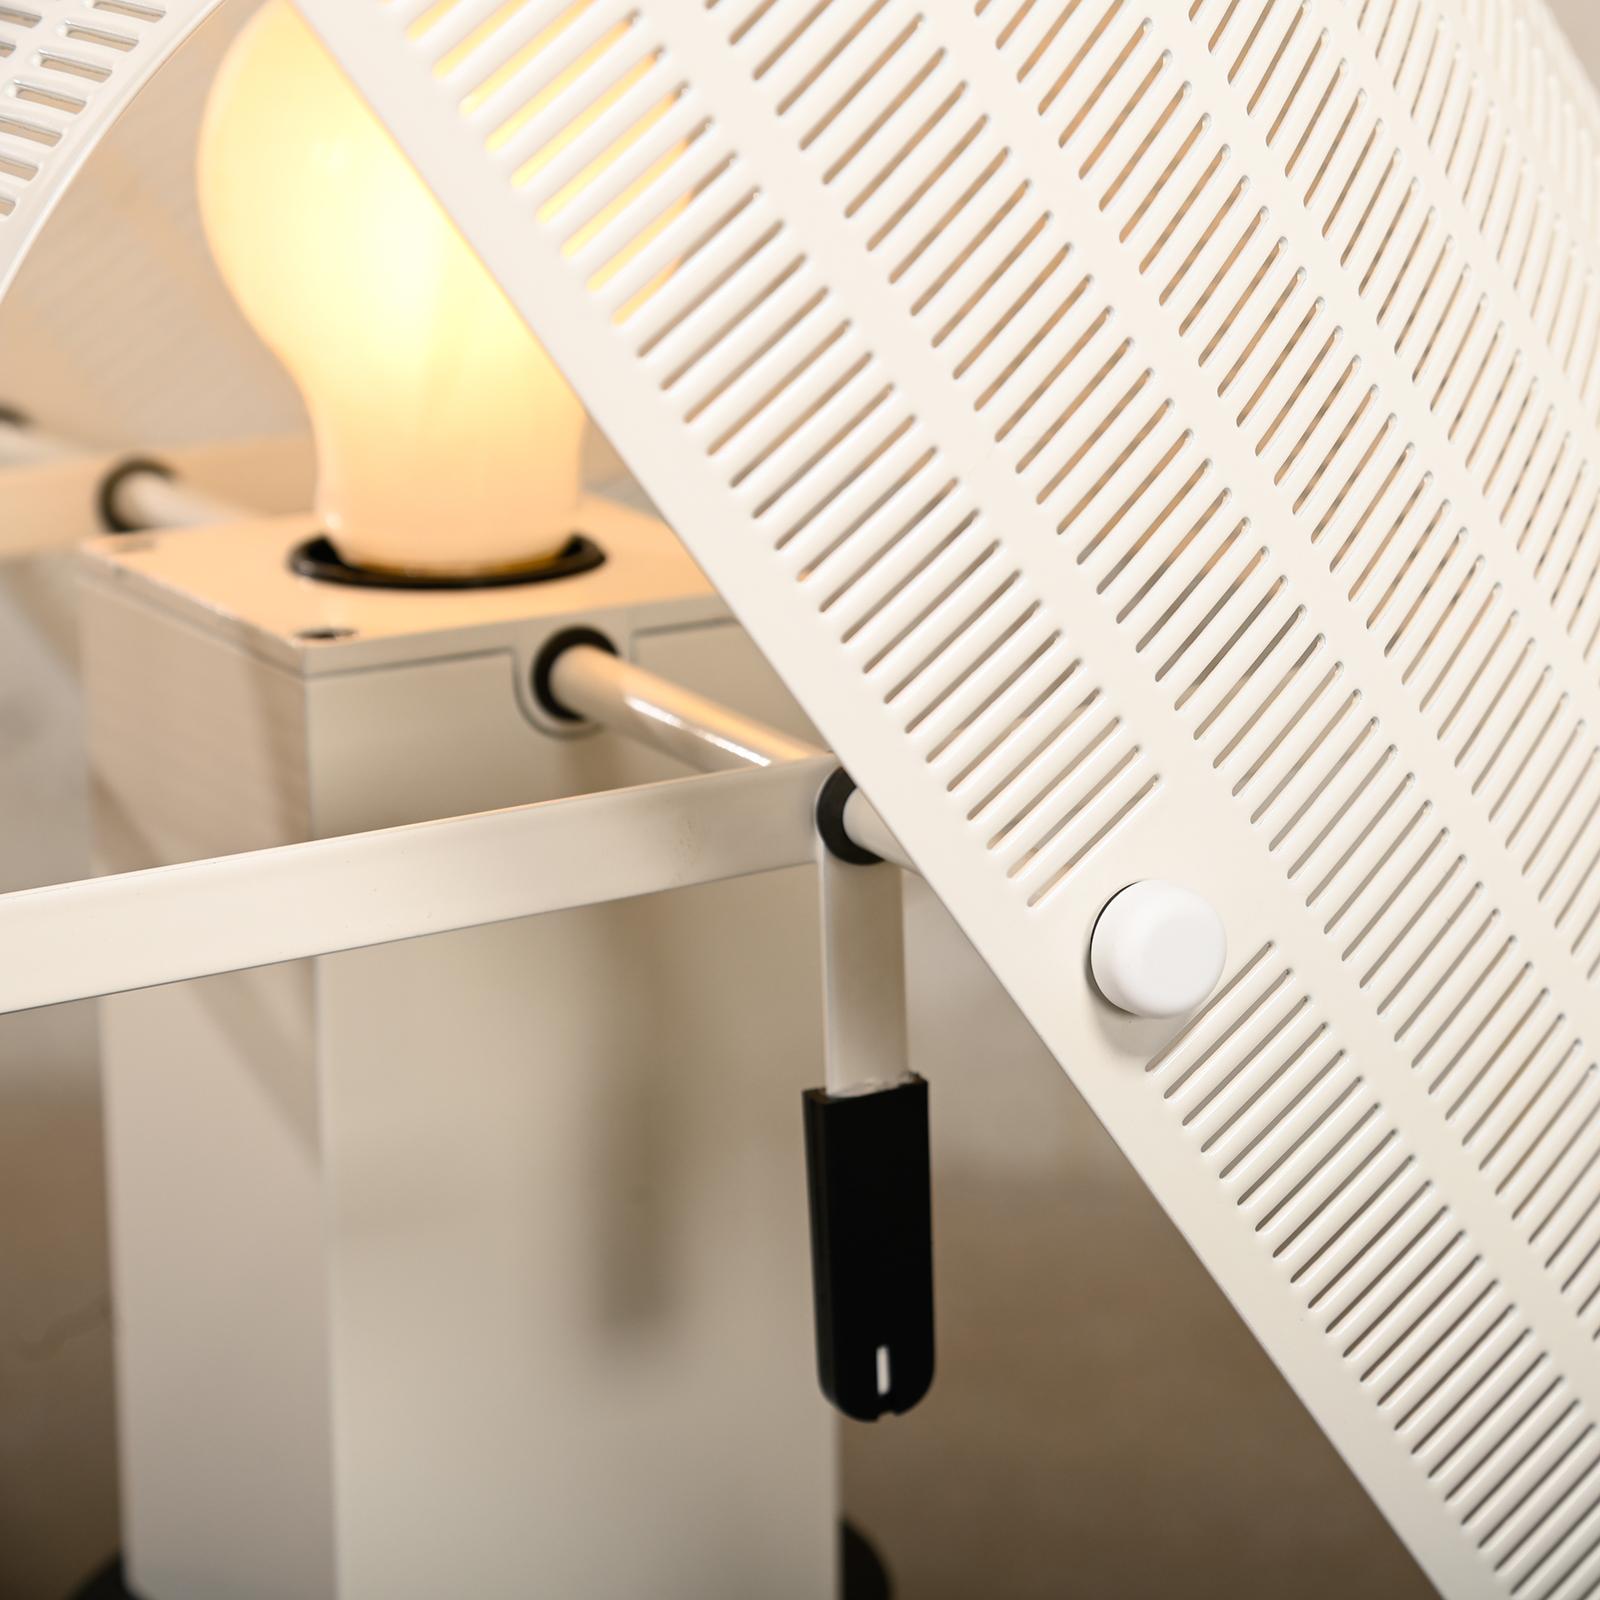 Mario Botta Shogun Table Lamp in black and white for Artemide, Italy For Sale 4